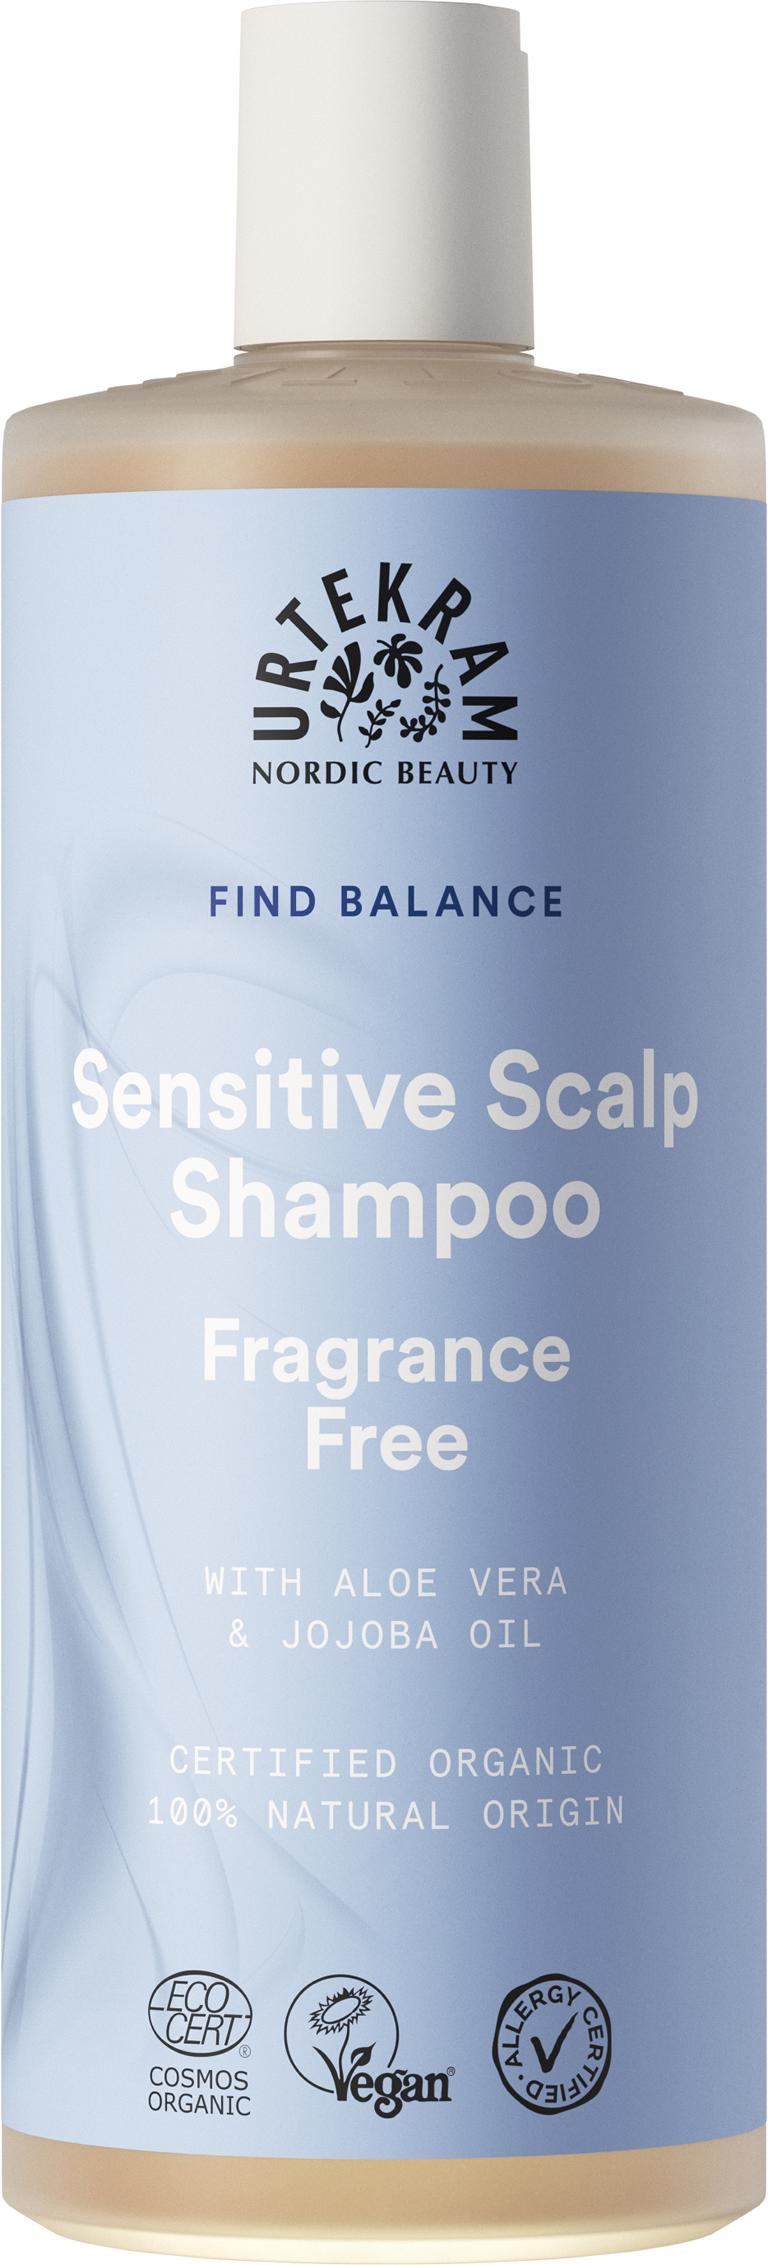 Urtekram Fragrance Free Sensitive Scalp Shampoo 500 ml